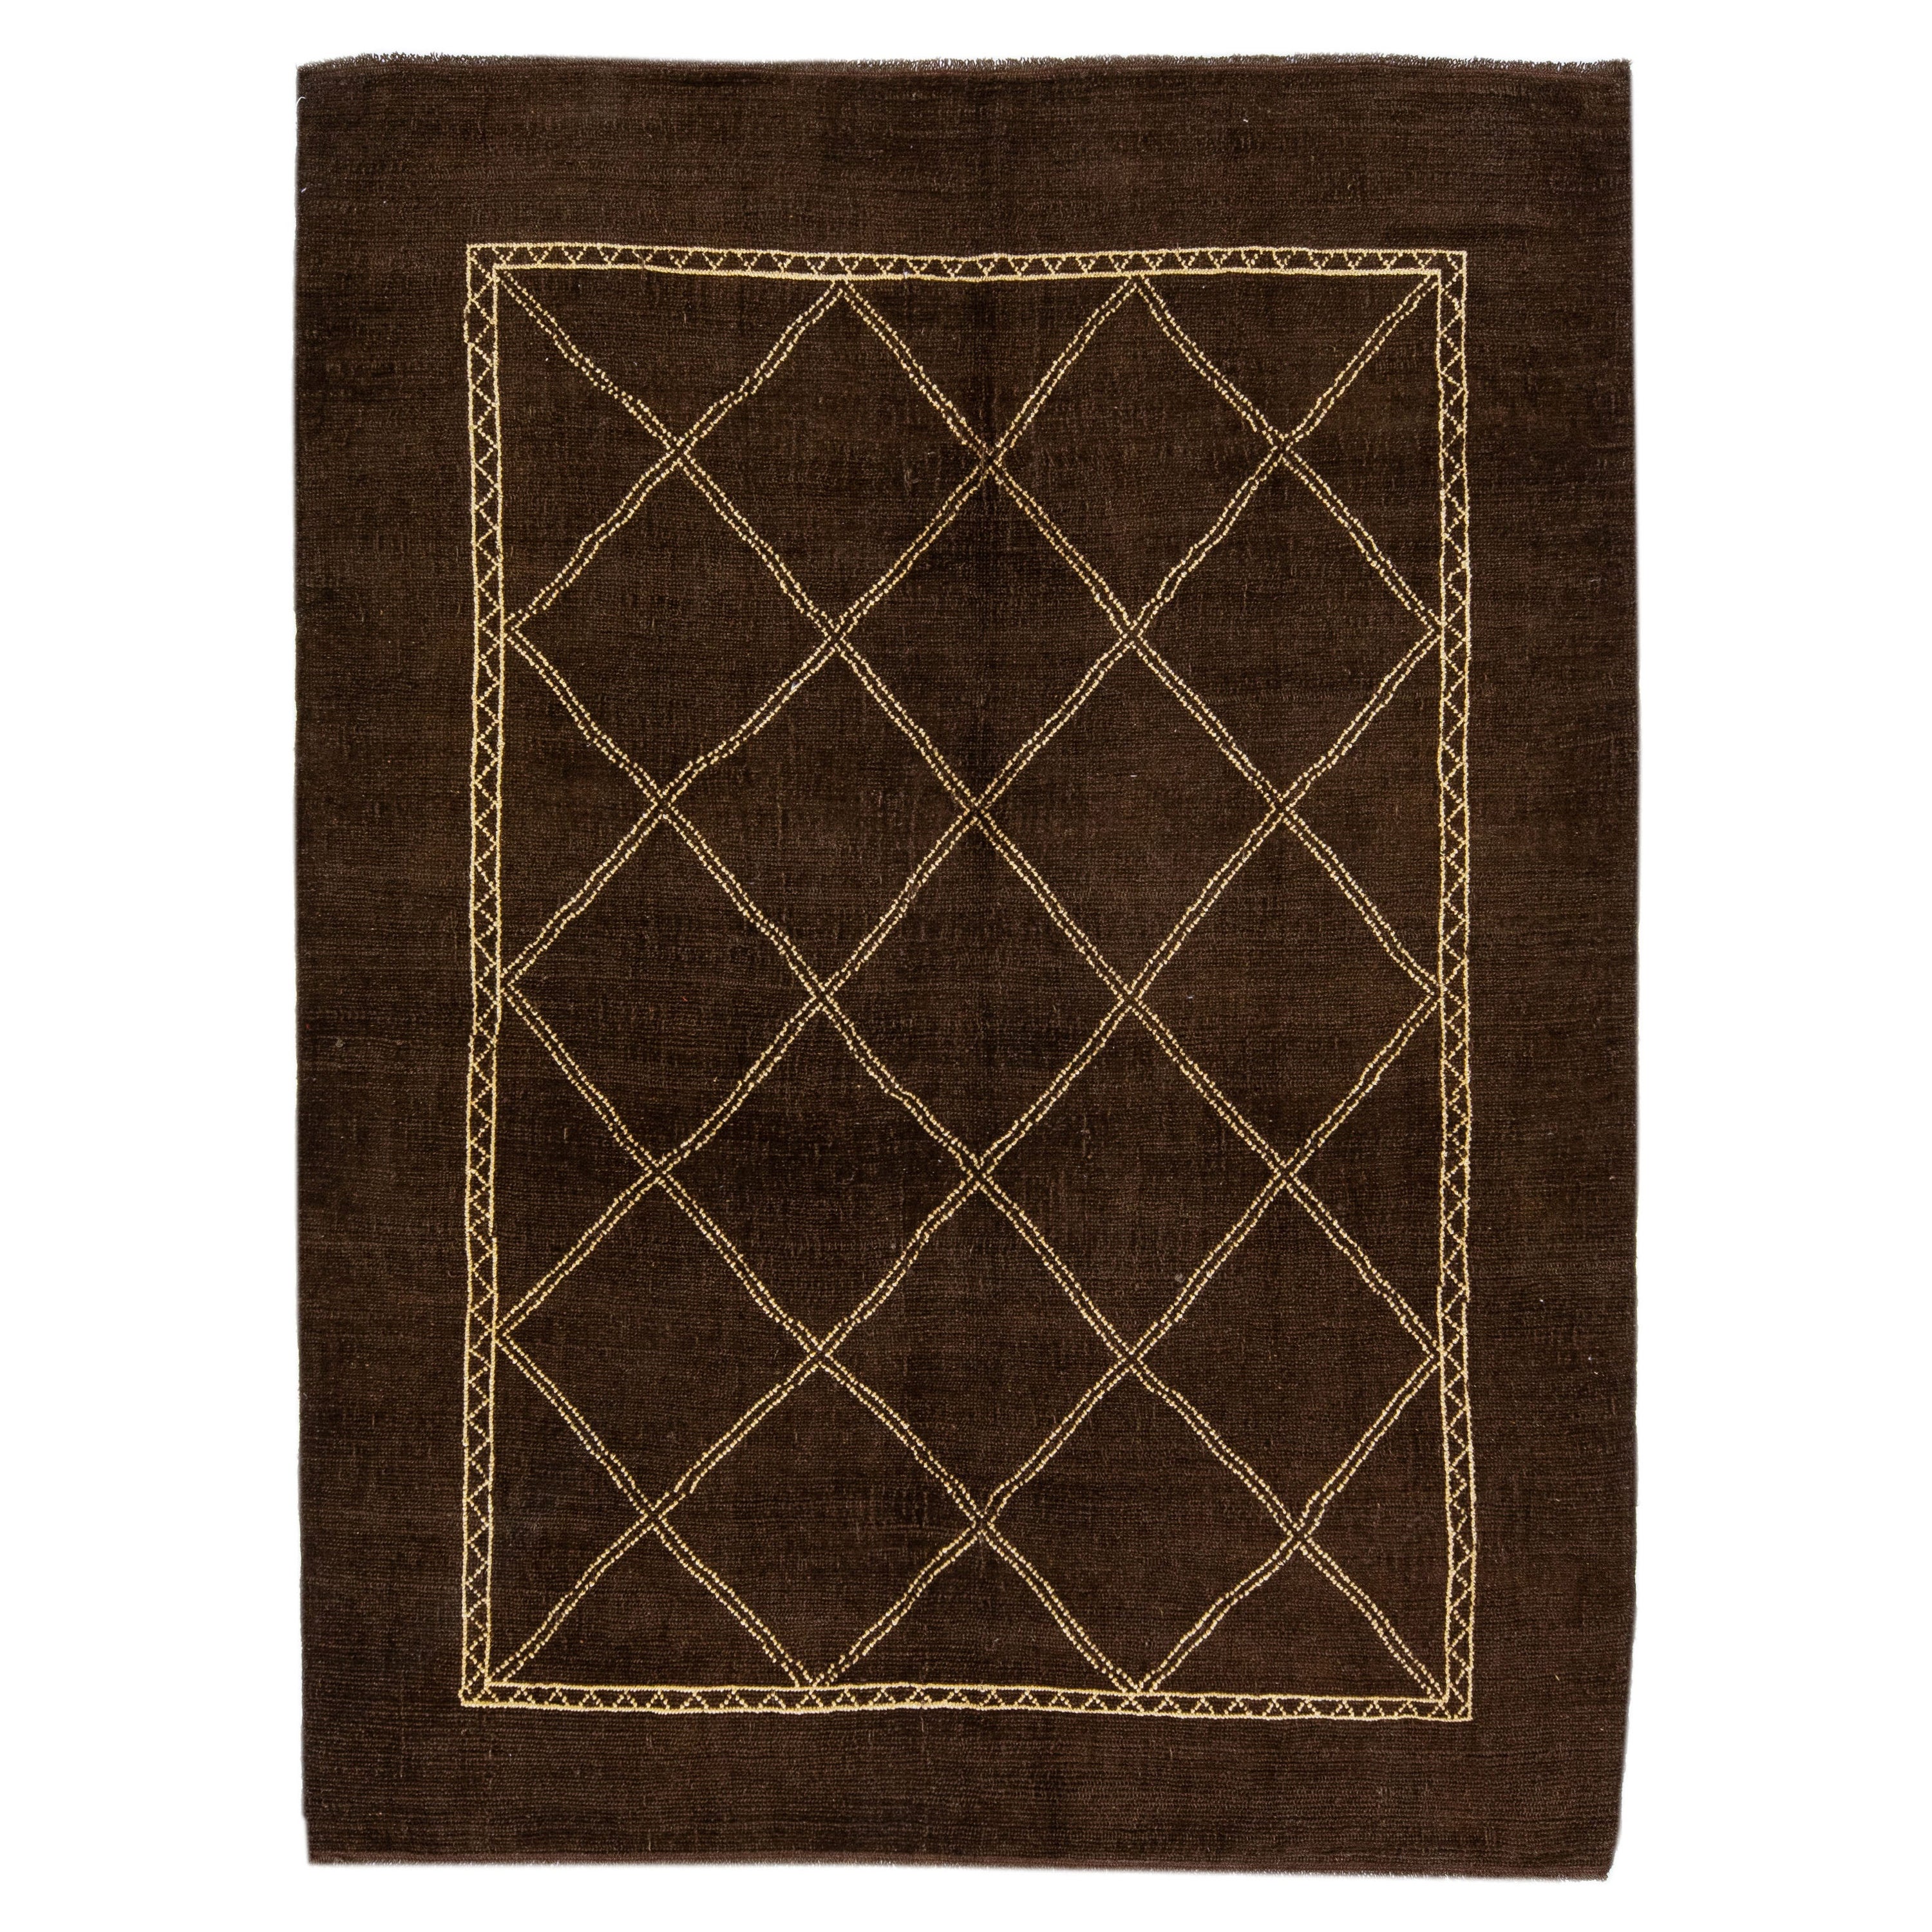 Brown Modern Moroccan Style Handmade Tribal Motif Wool Rug by Apadana For Sale